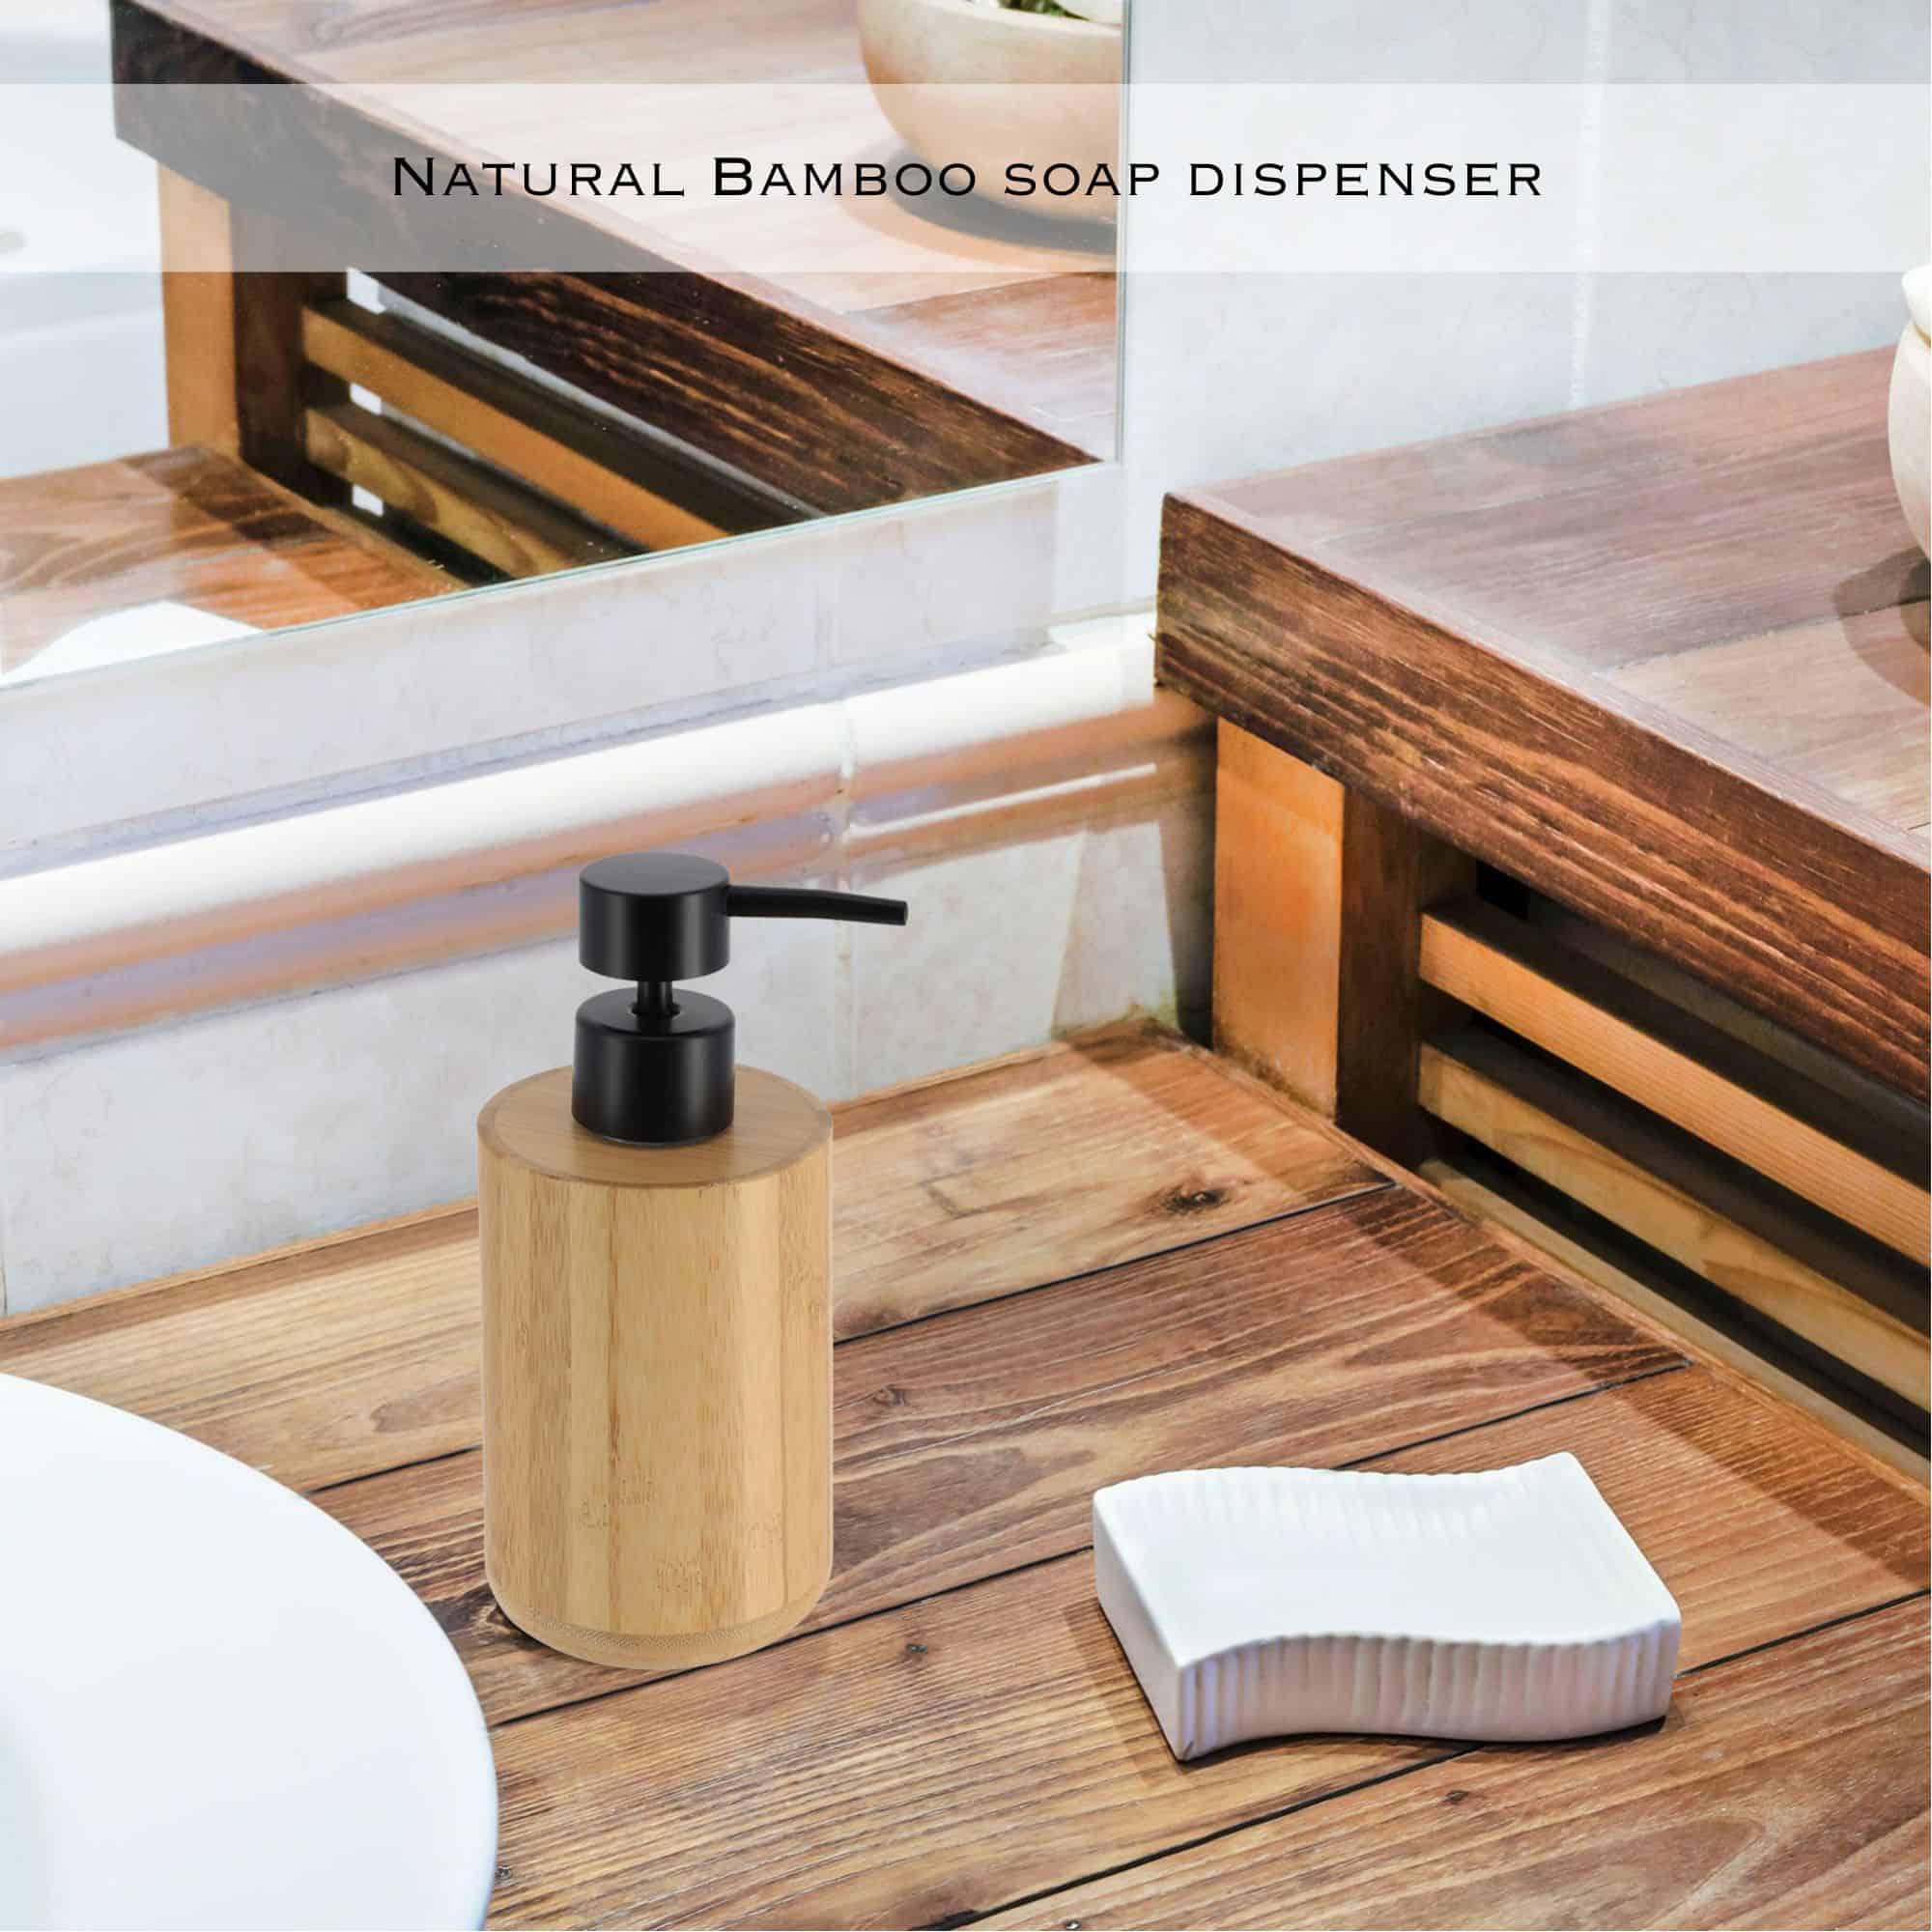 Soap dispenser on a wooden countertop